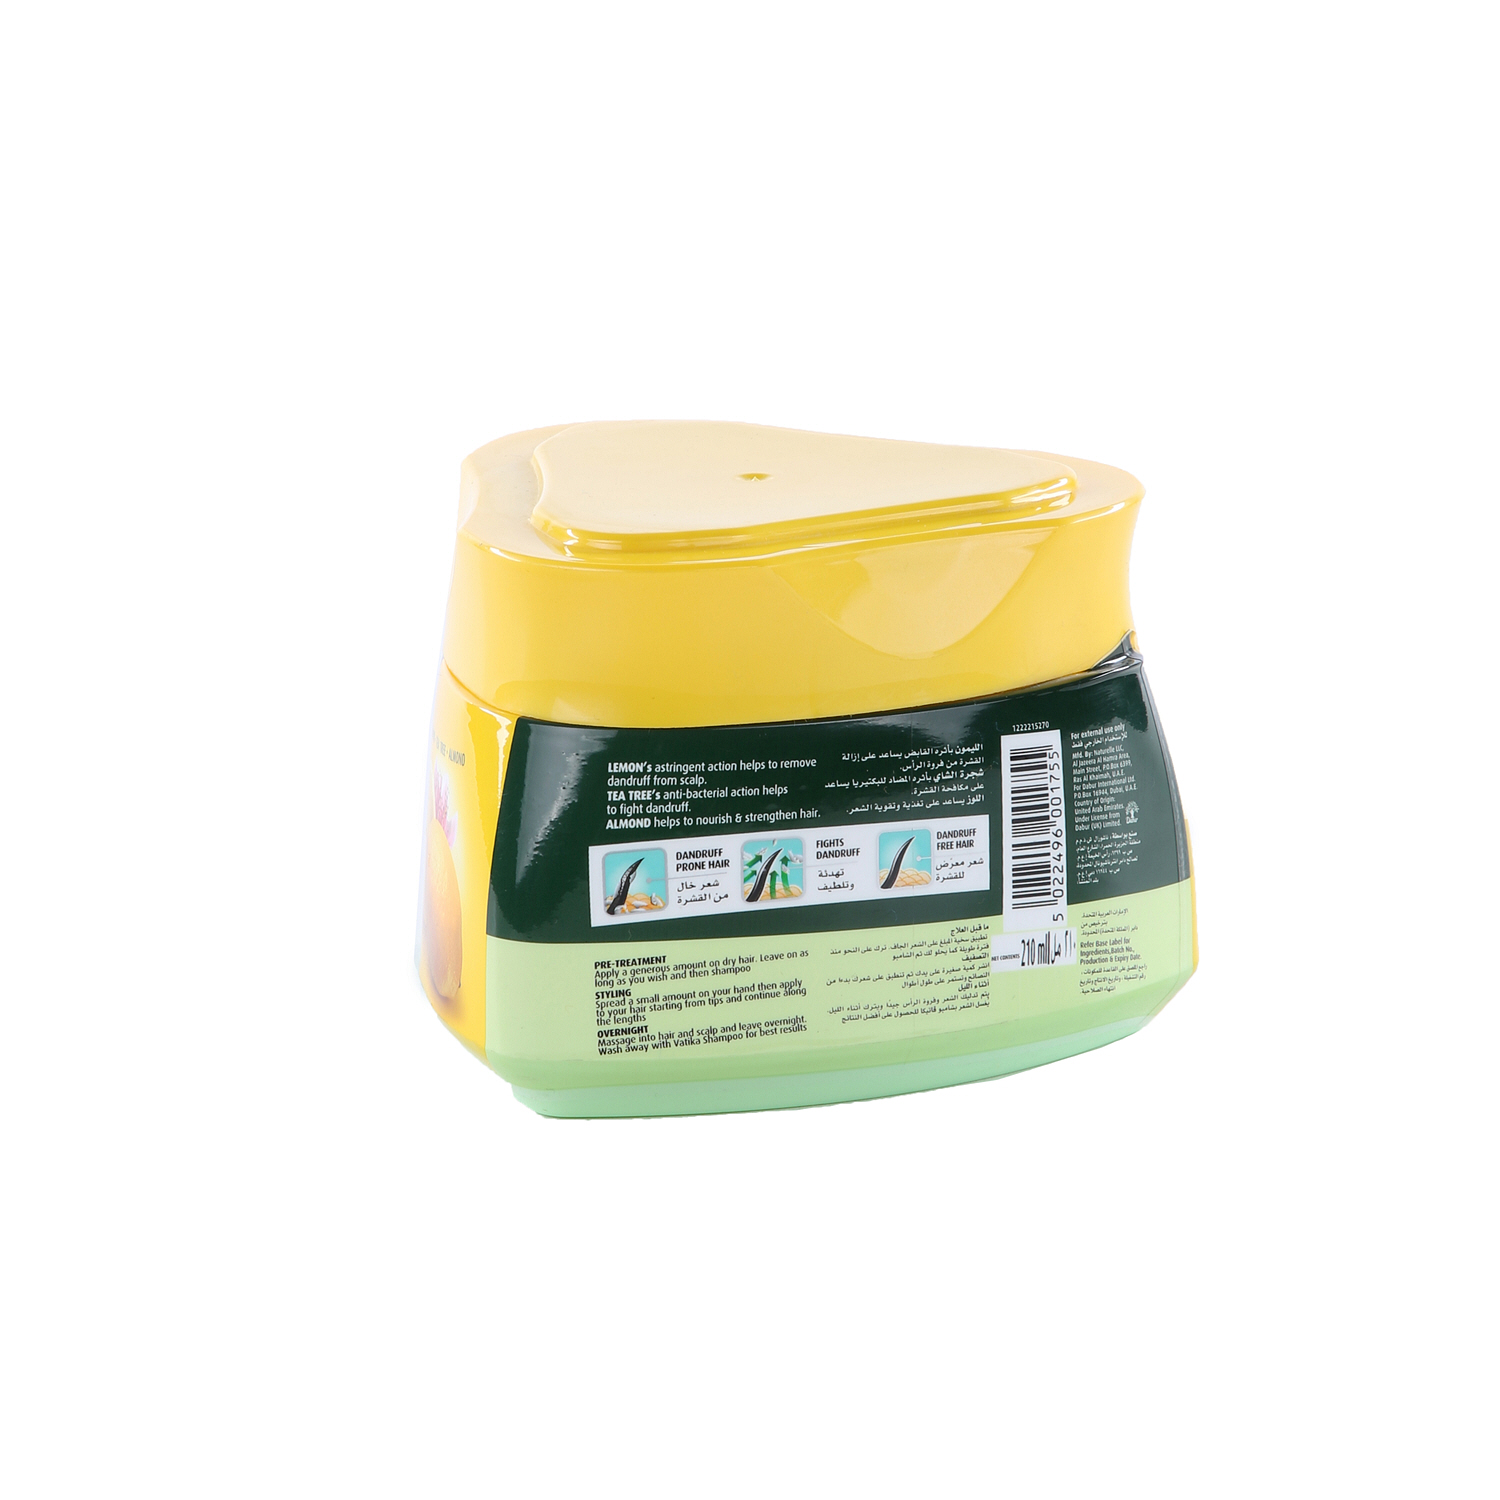 Dabur Vatika Hair Styling Cream Anti Dandruff Guard 210ml